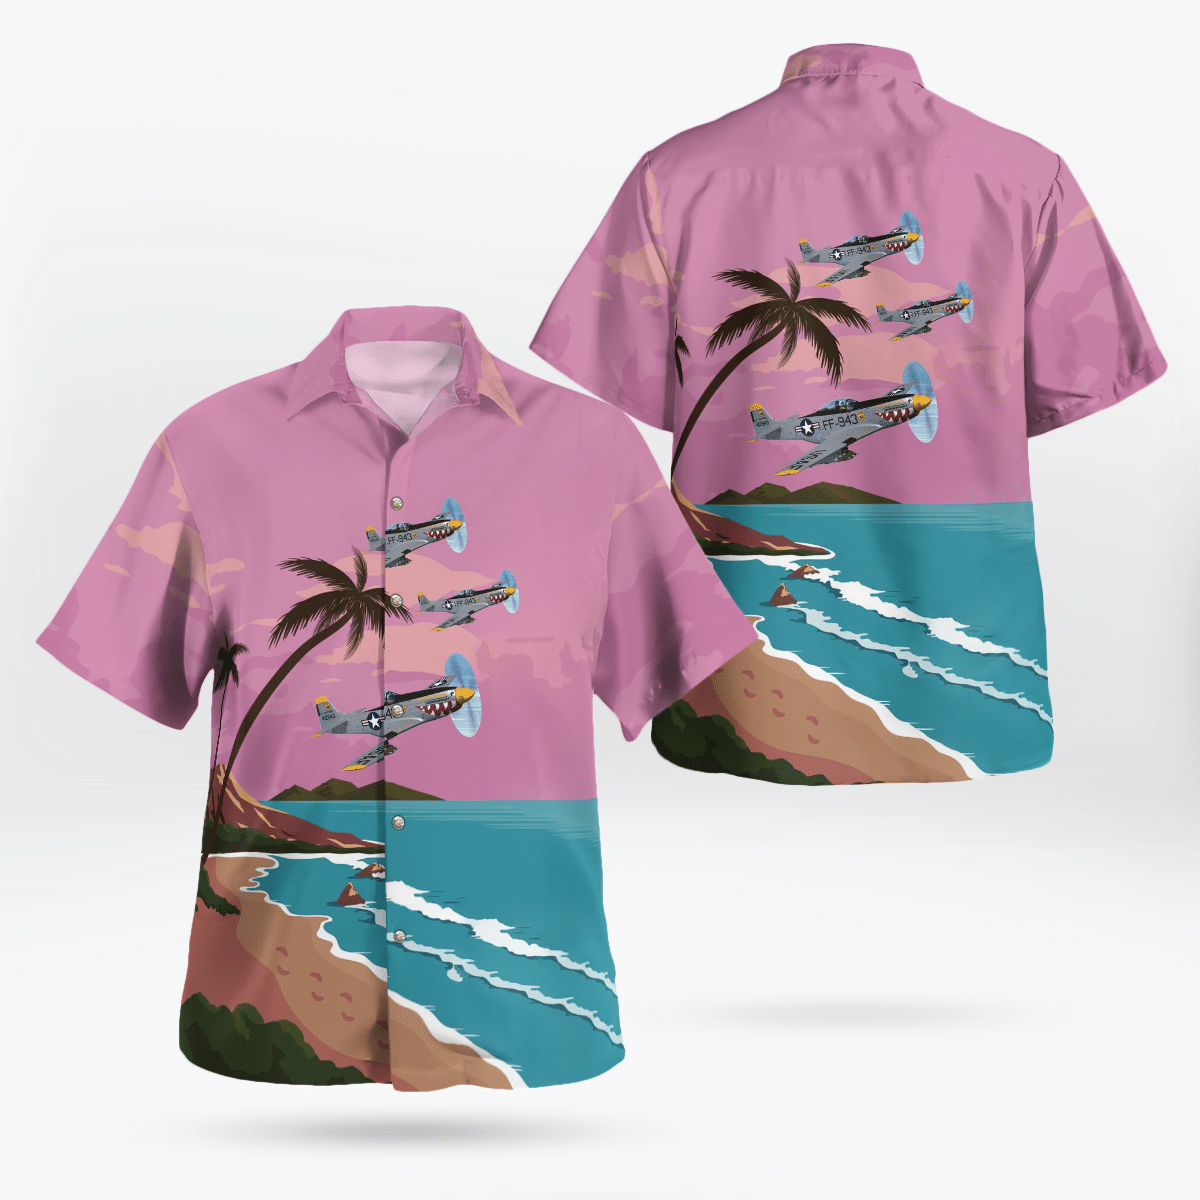 Summer so cool with top new hawaiian shirt below 106